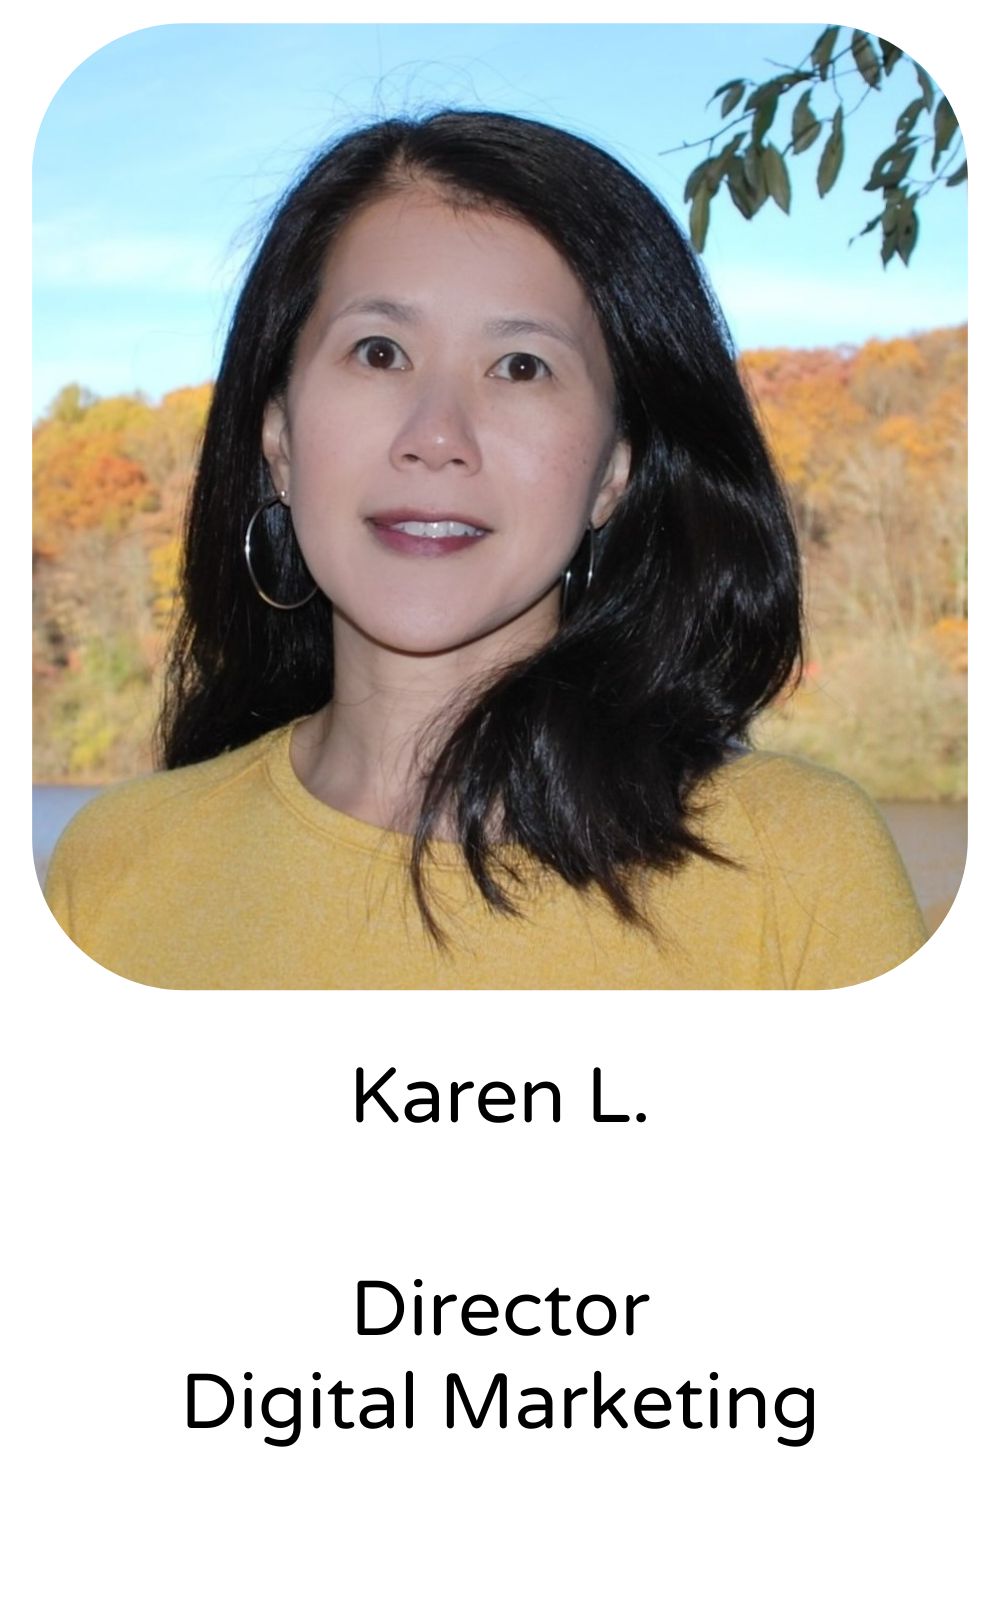 Karen L, Director, Digital Marketing